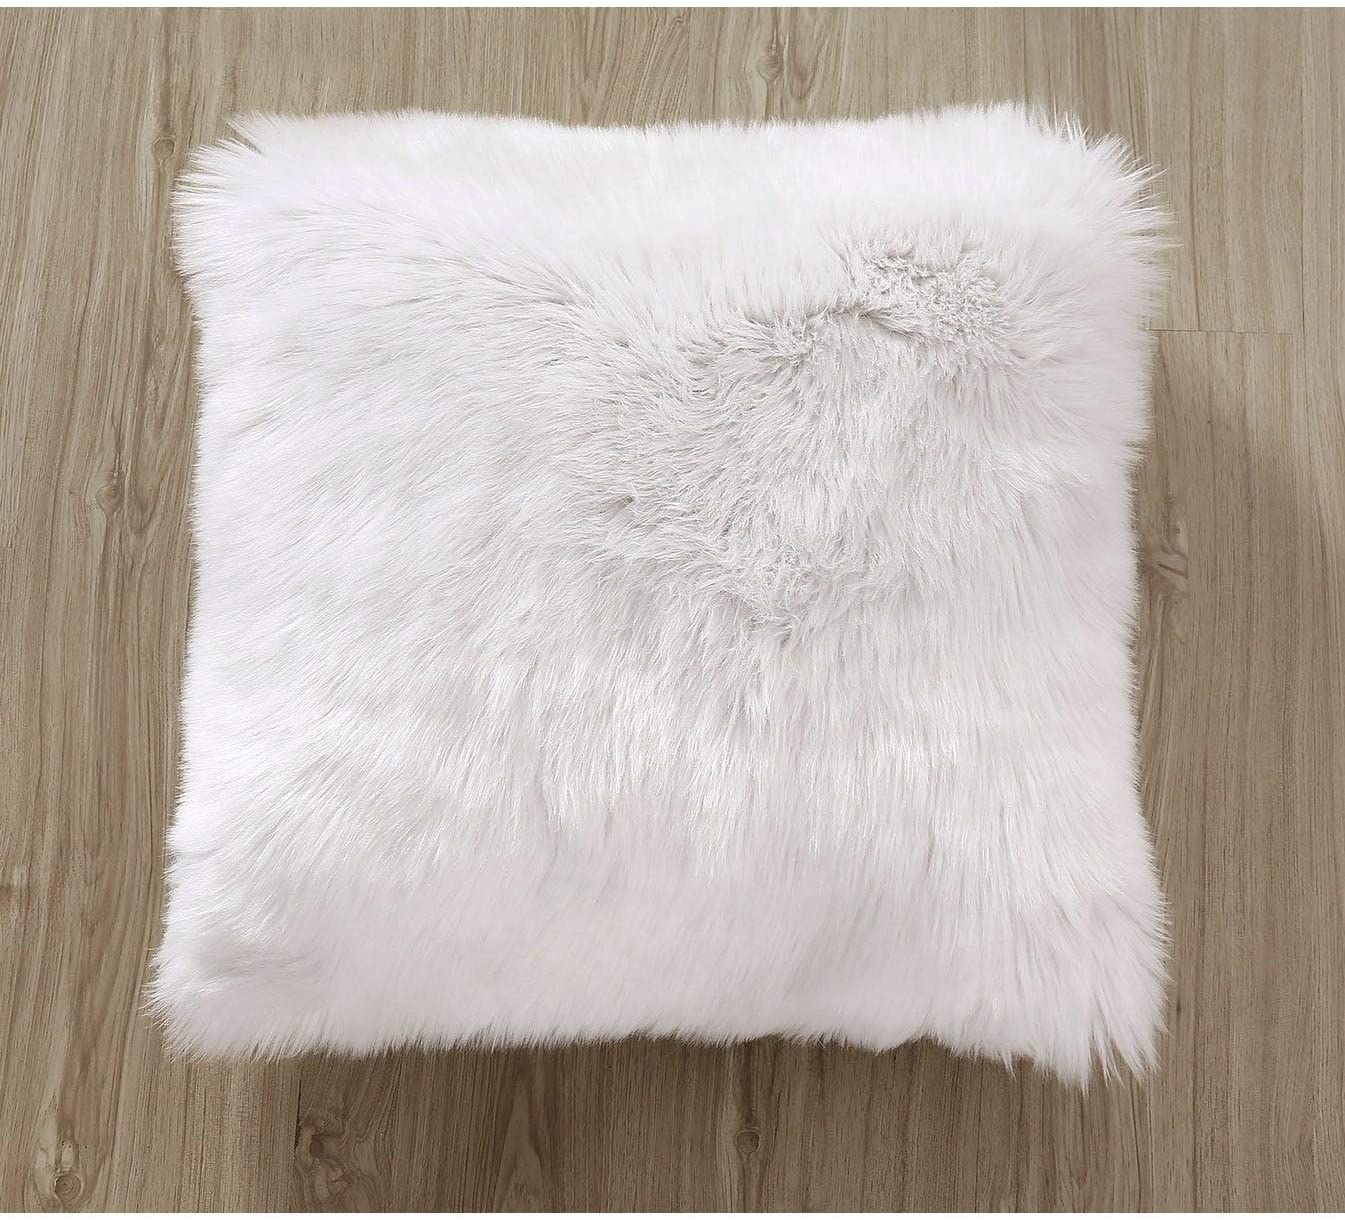 Plush White Mongolian Faux Fur Throw Pillow Cover Color Graphic Casual Cotton Removable